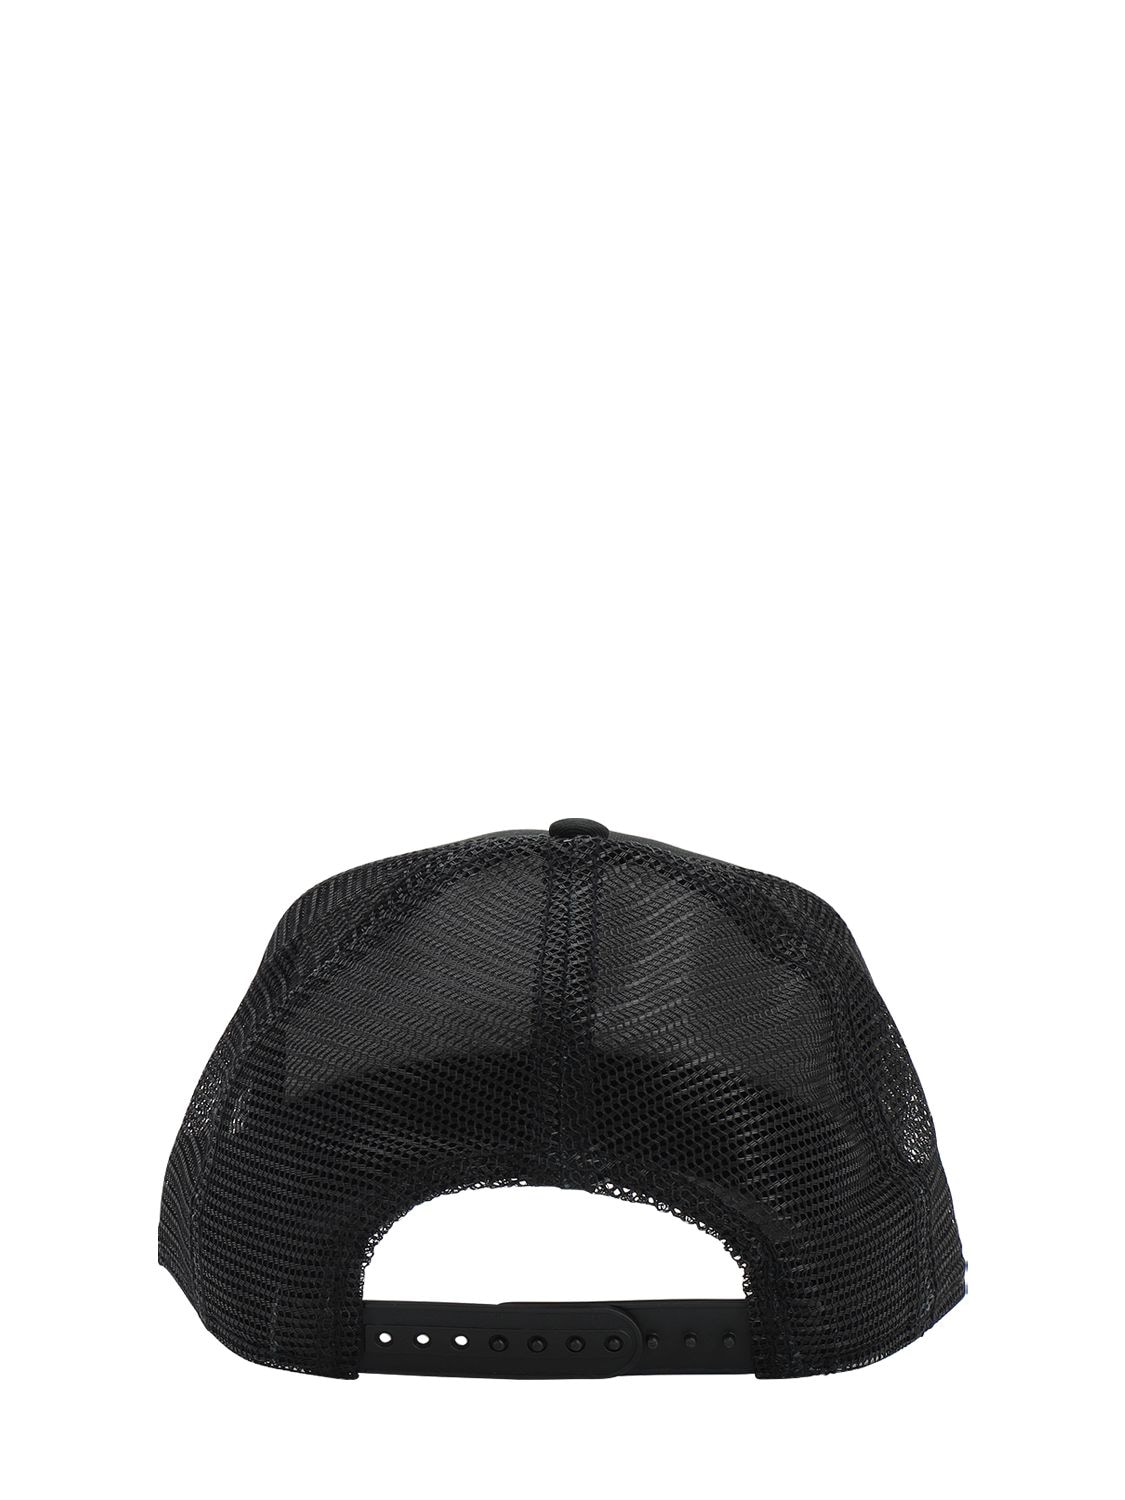 Shop Goorin Bros Black Panther Tucker Hat W/patch